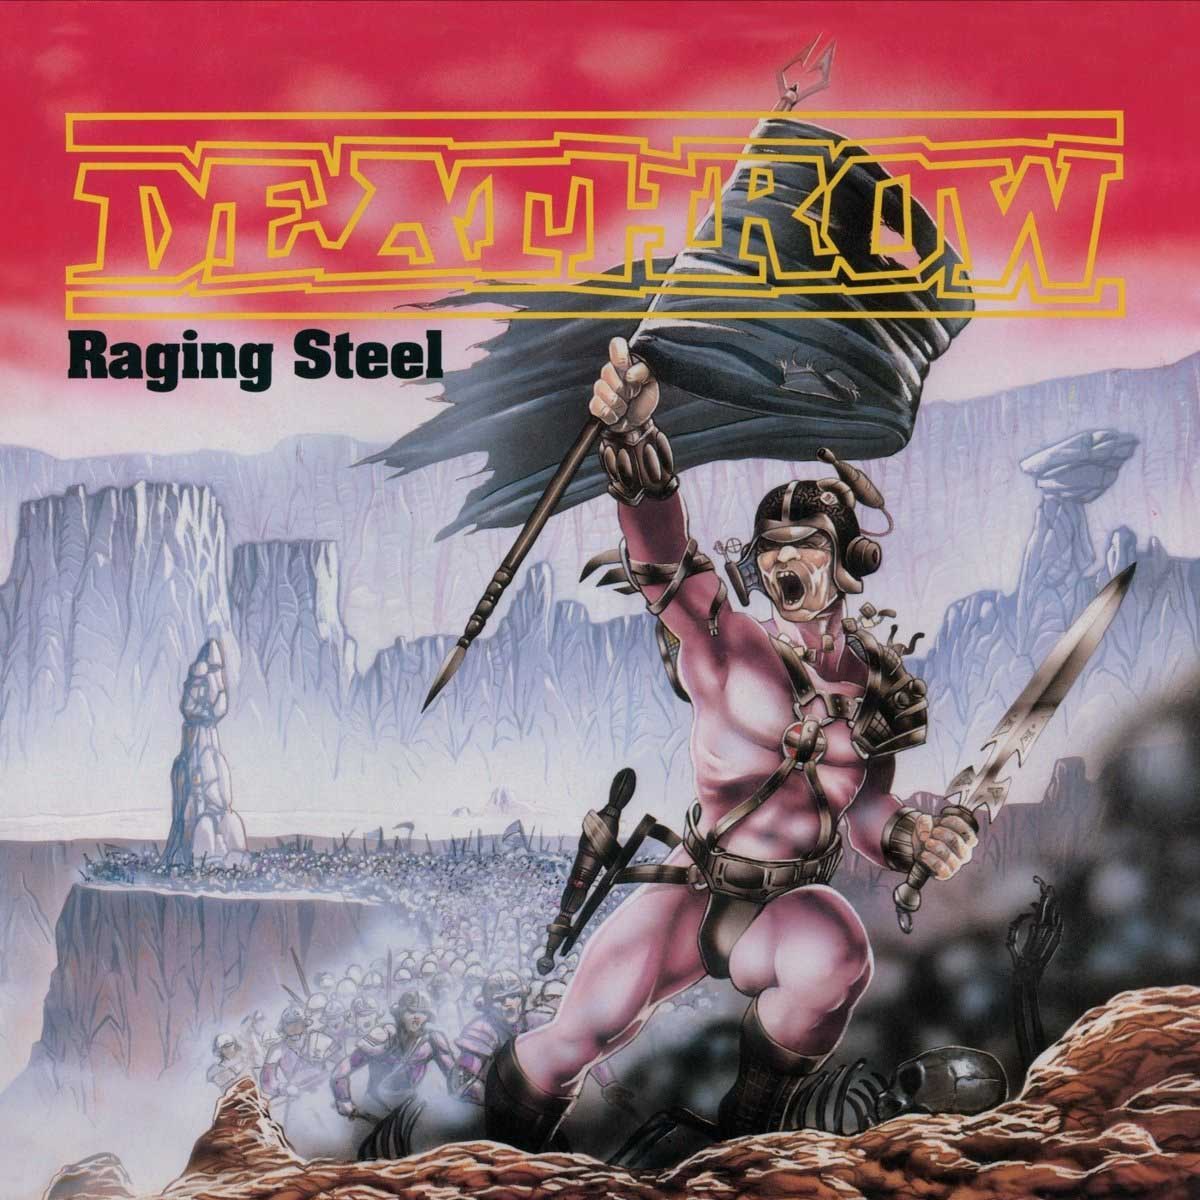 Deathrow "Raging Steel" Digipak CD